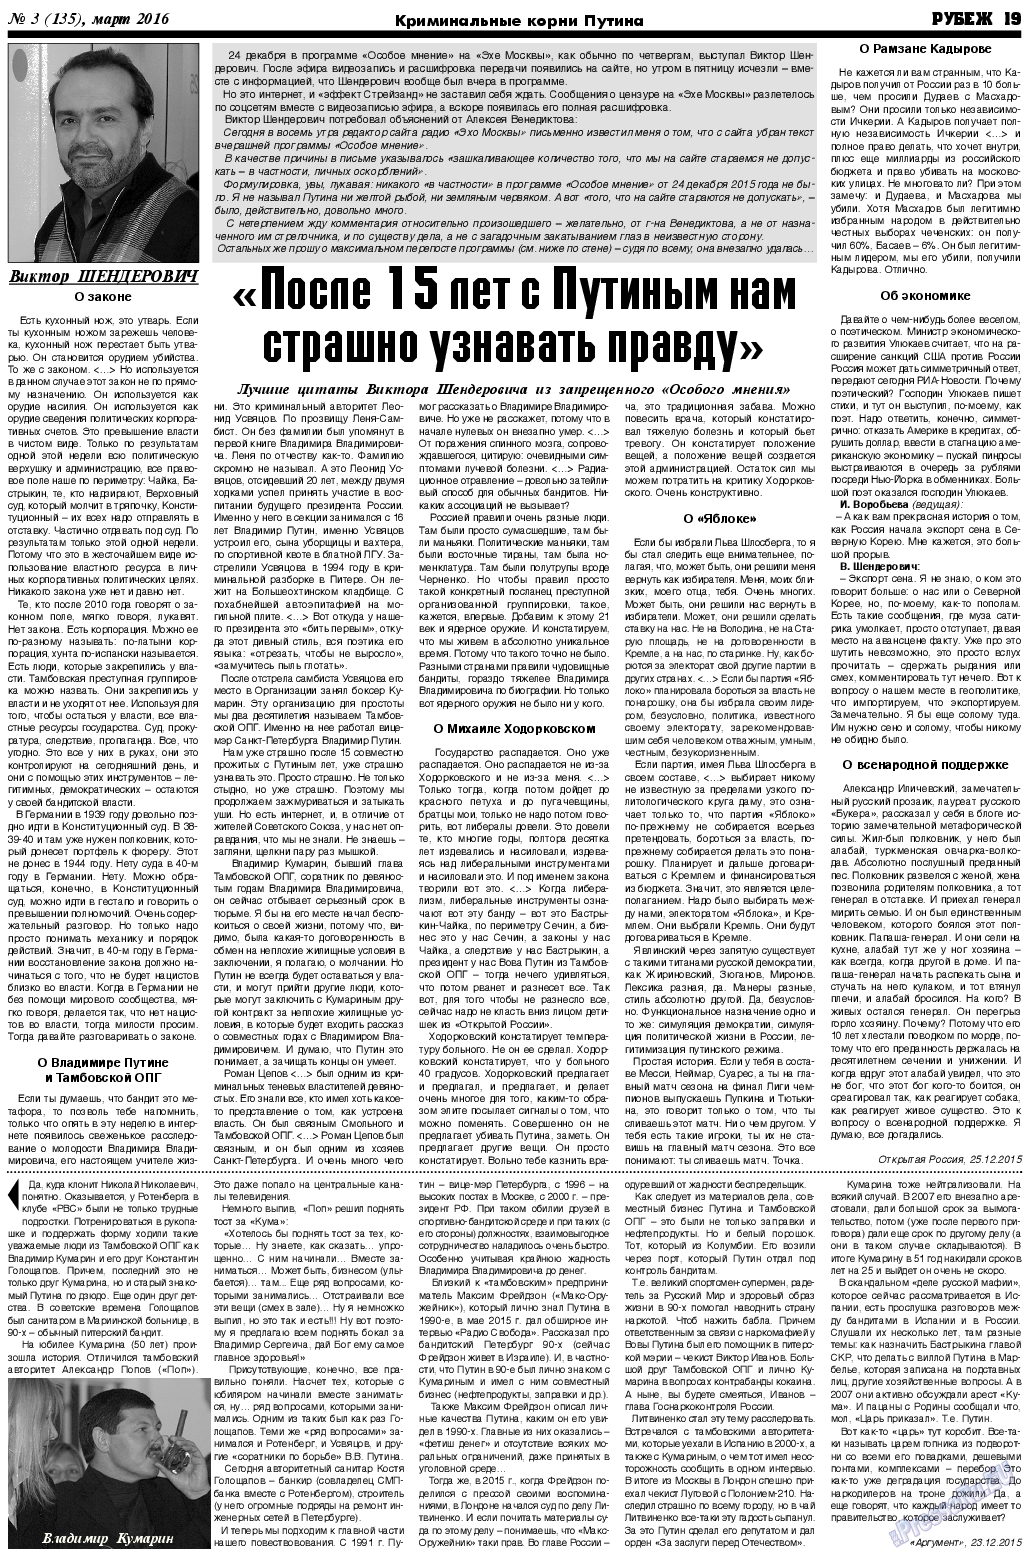 Рубеж, газета. 2016 №3 стр.19